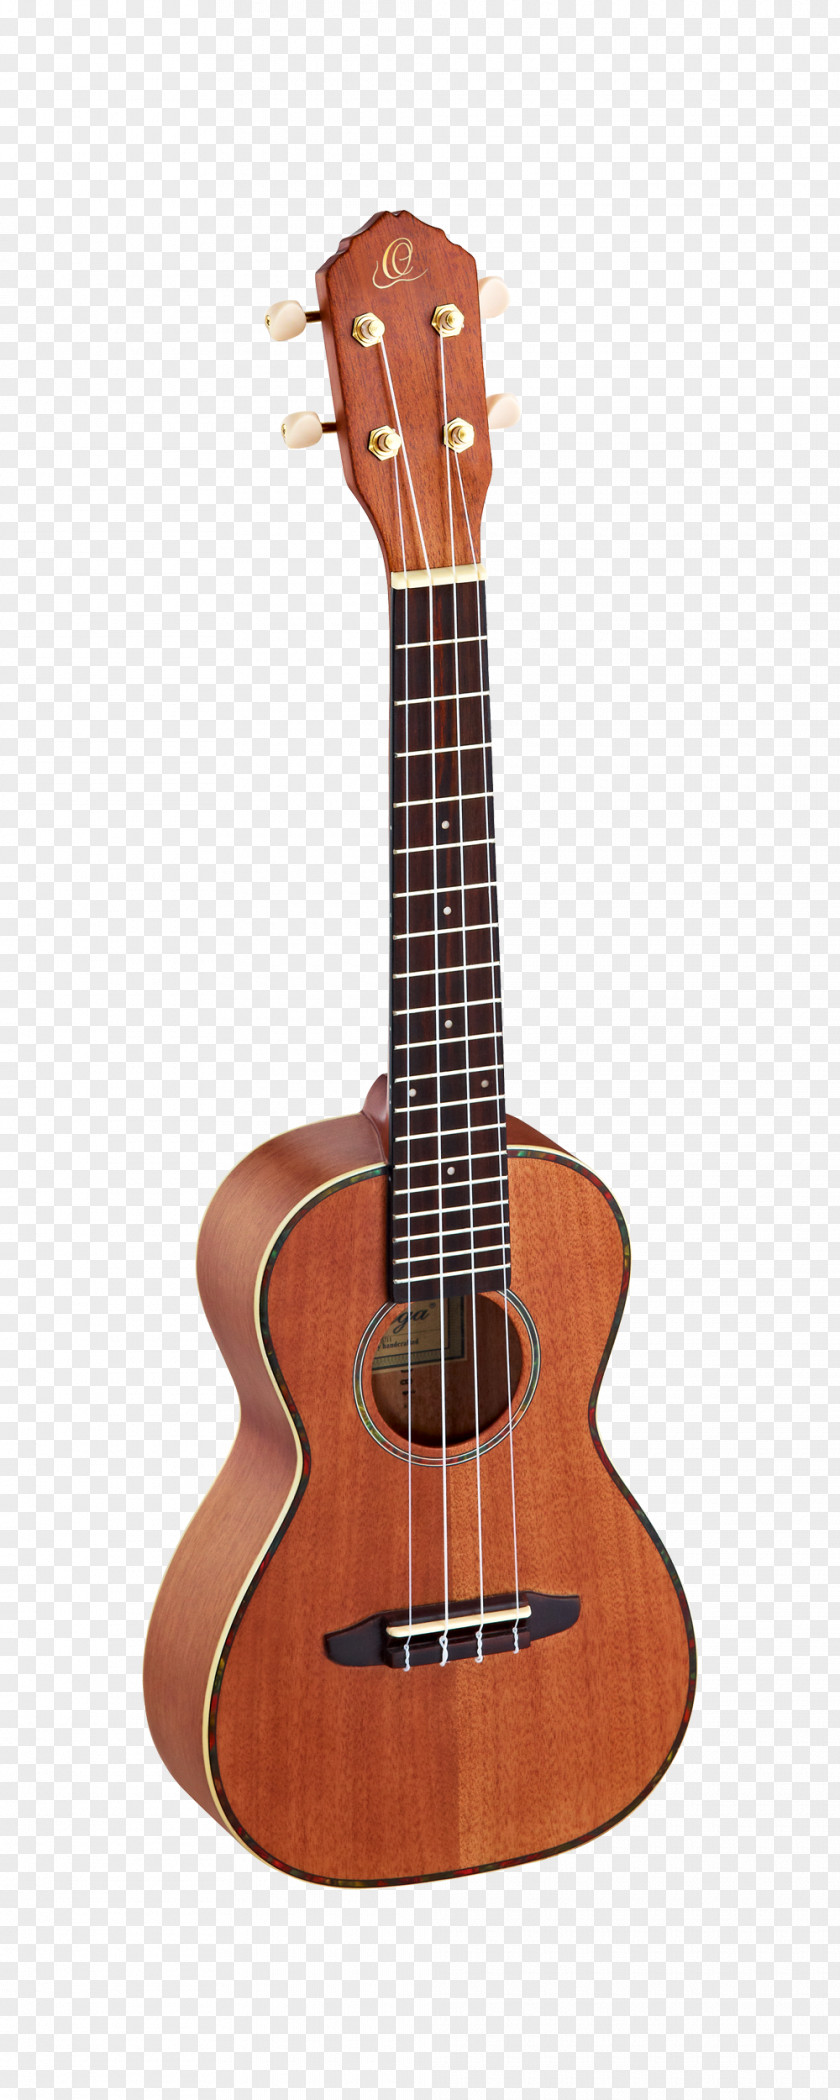 Amancio Ortega Ukulele Steel-string Acoustic Guitar Musical Instruments Electric PNG